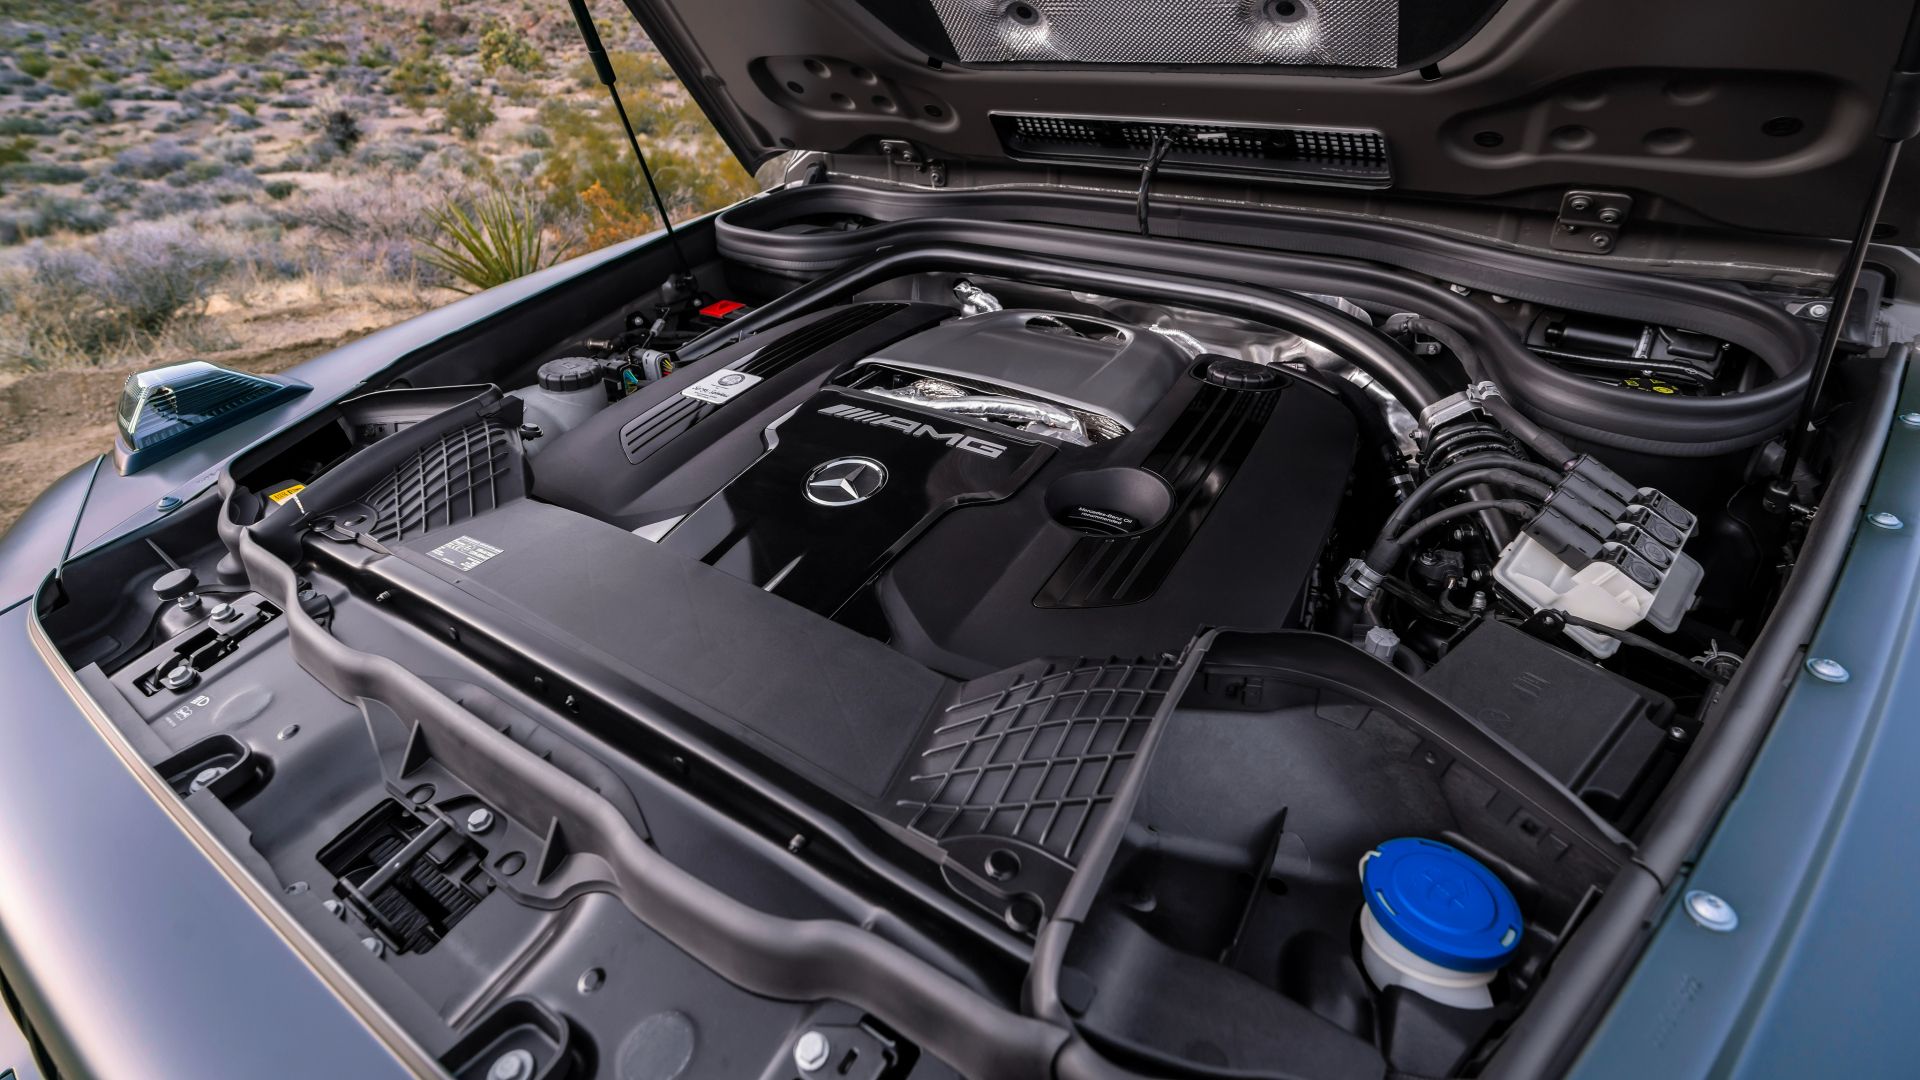 Mercedes-AMG G63 Engine